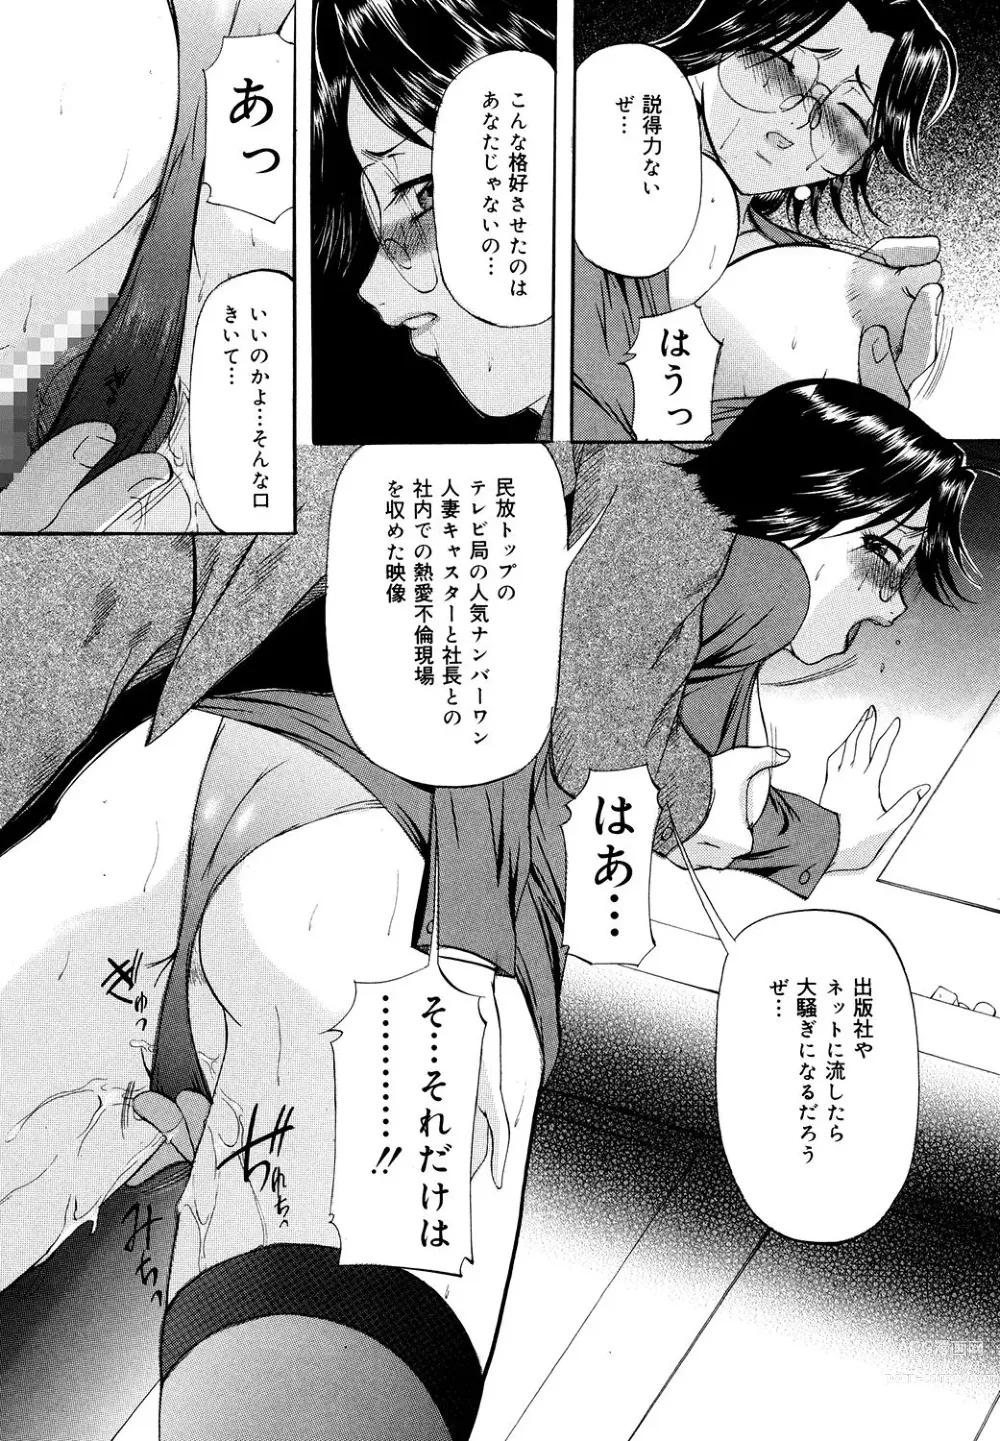 Page 149 of manga Kyonyuu Korogashi